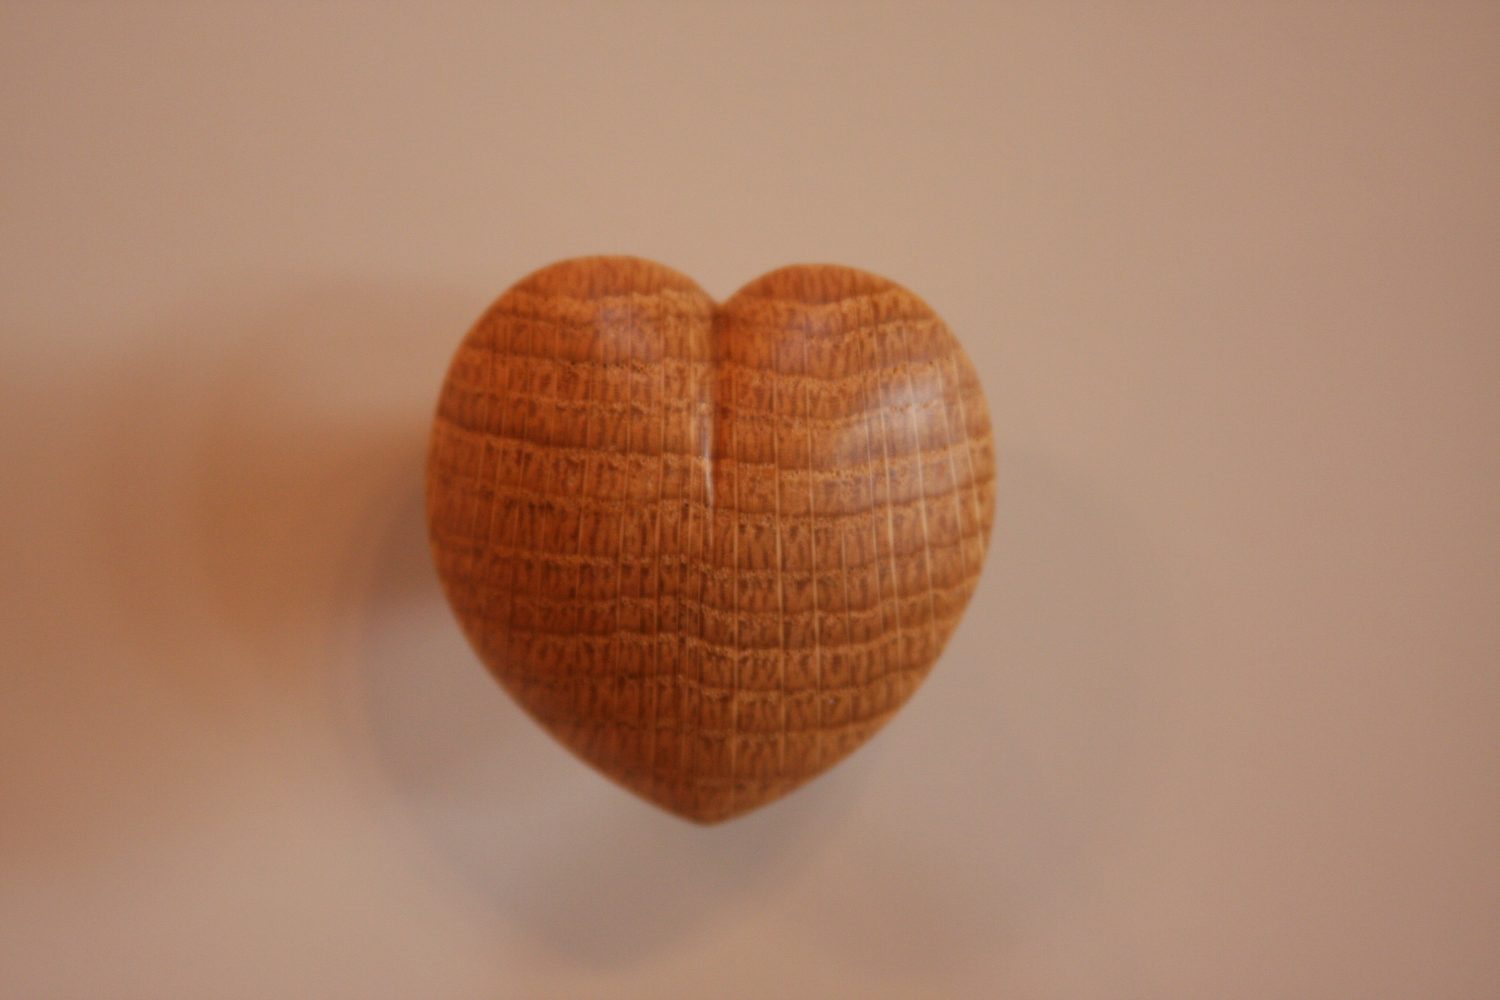 Turned Heart shaped knobs